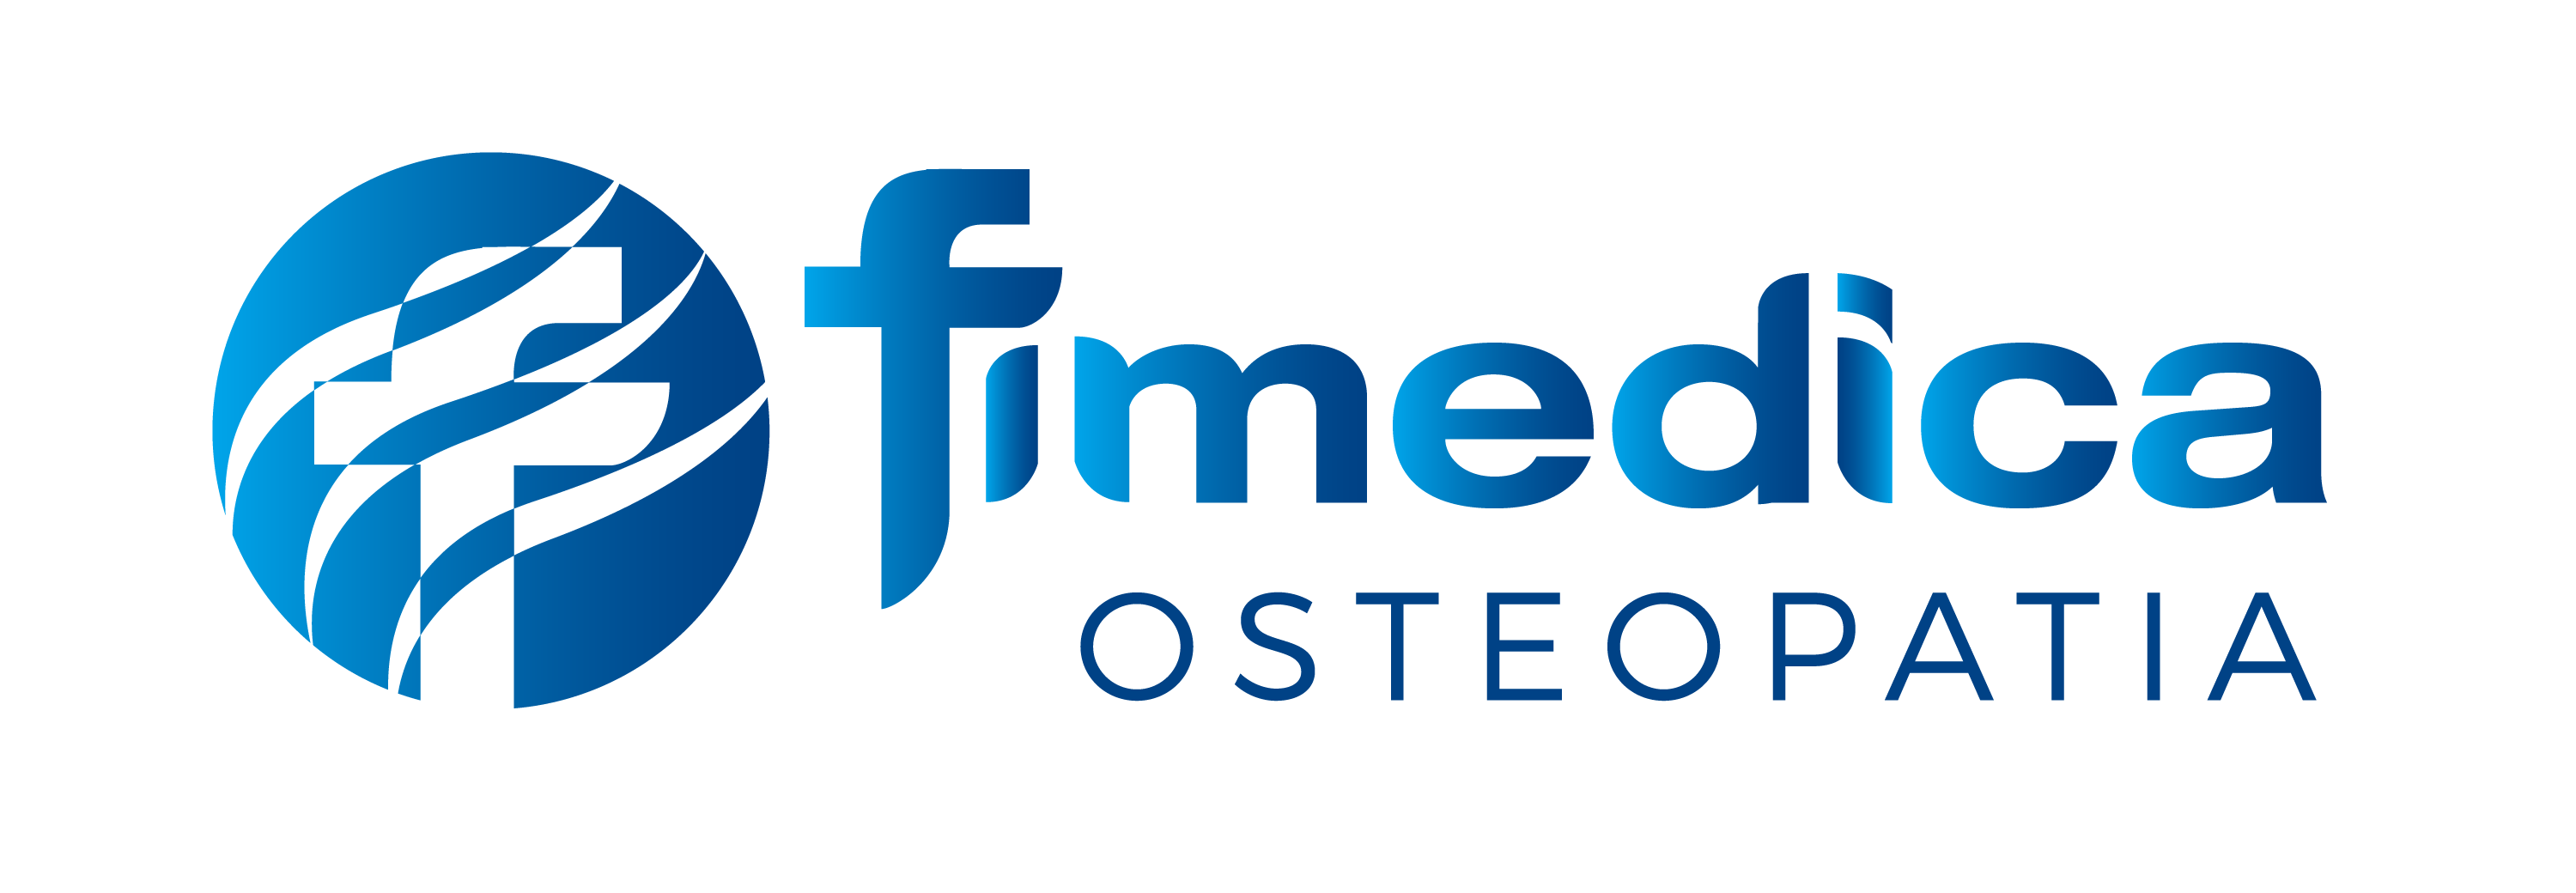 Fimedica Osteopatia Warszawa